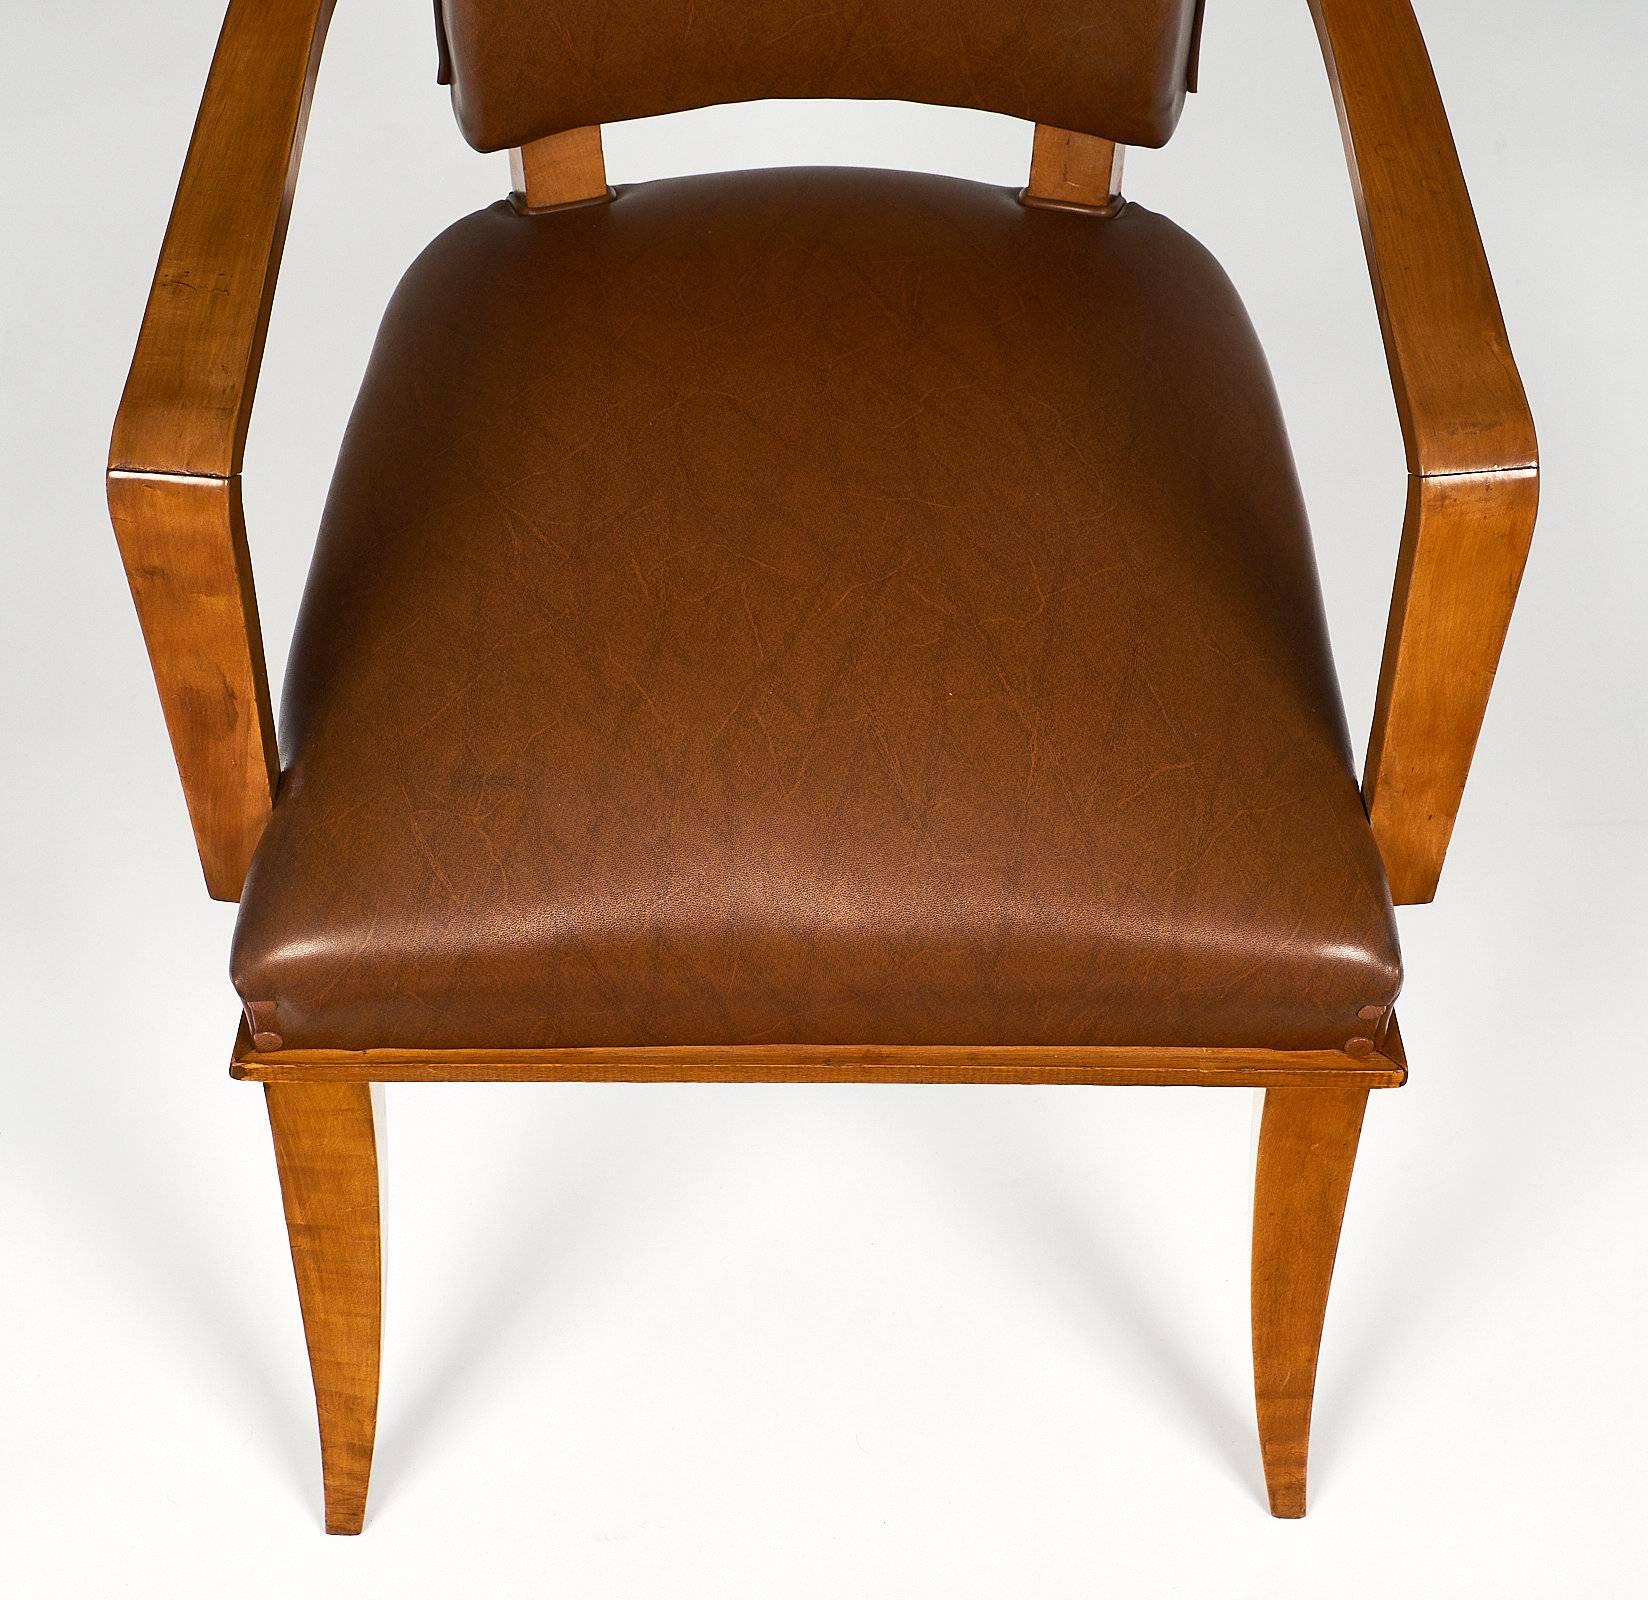 Mid-20th Century French Art Deco Bridge Chairs